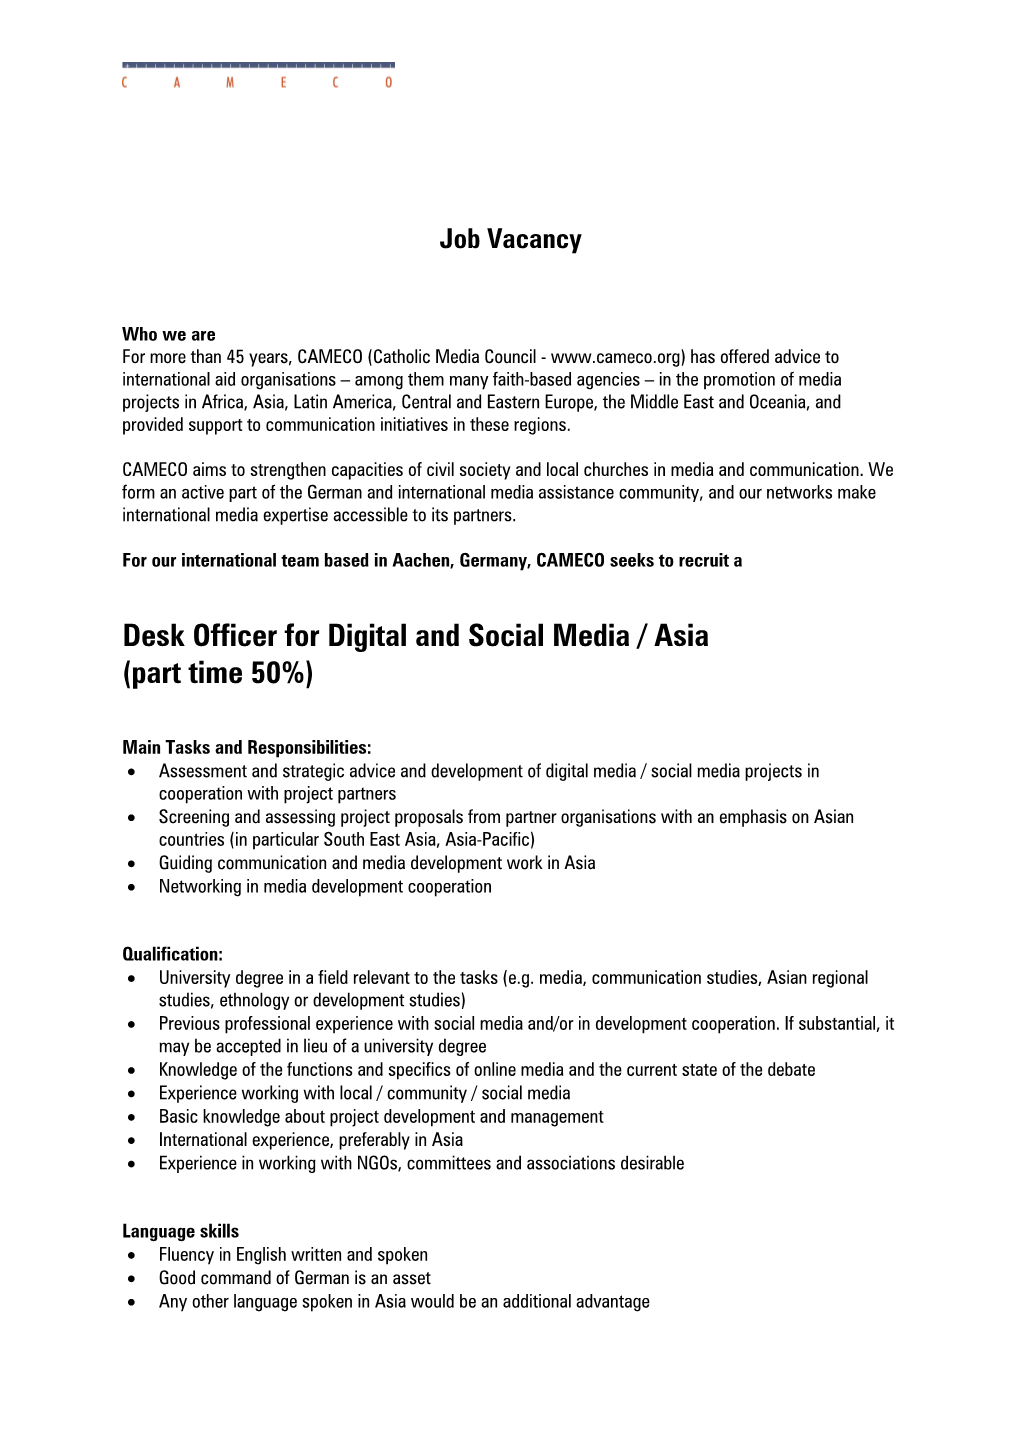 Desk Officer for Digital and Social Media / Asia (Part Time 50%)